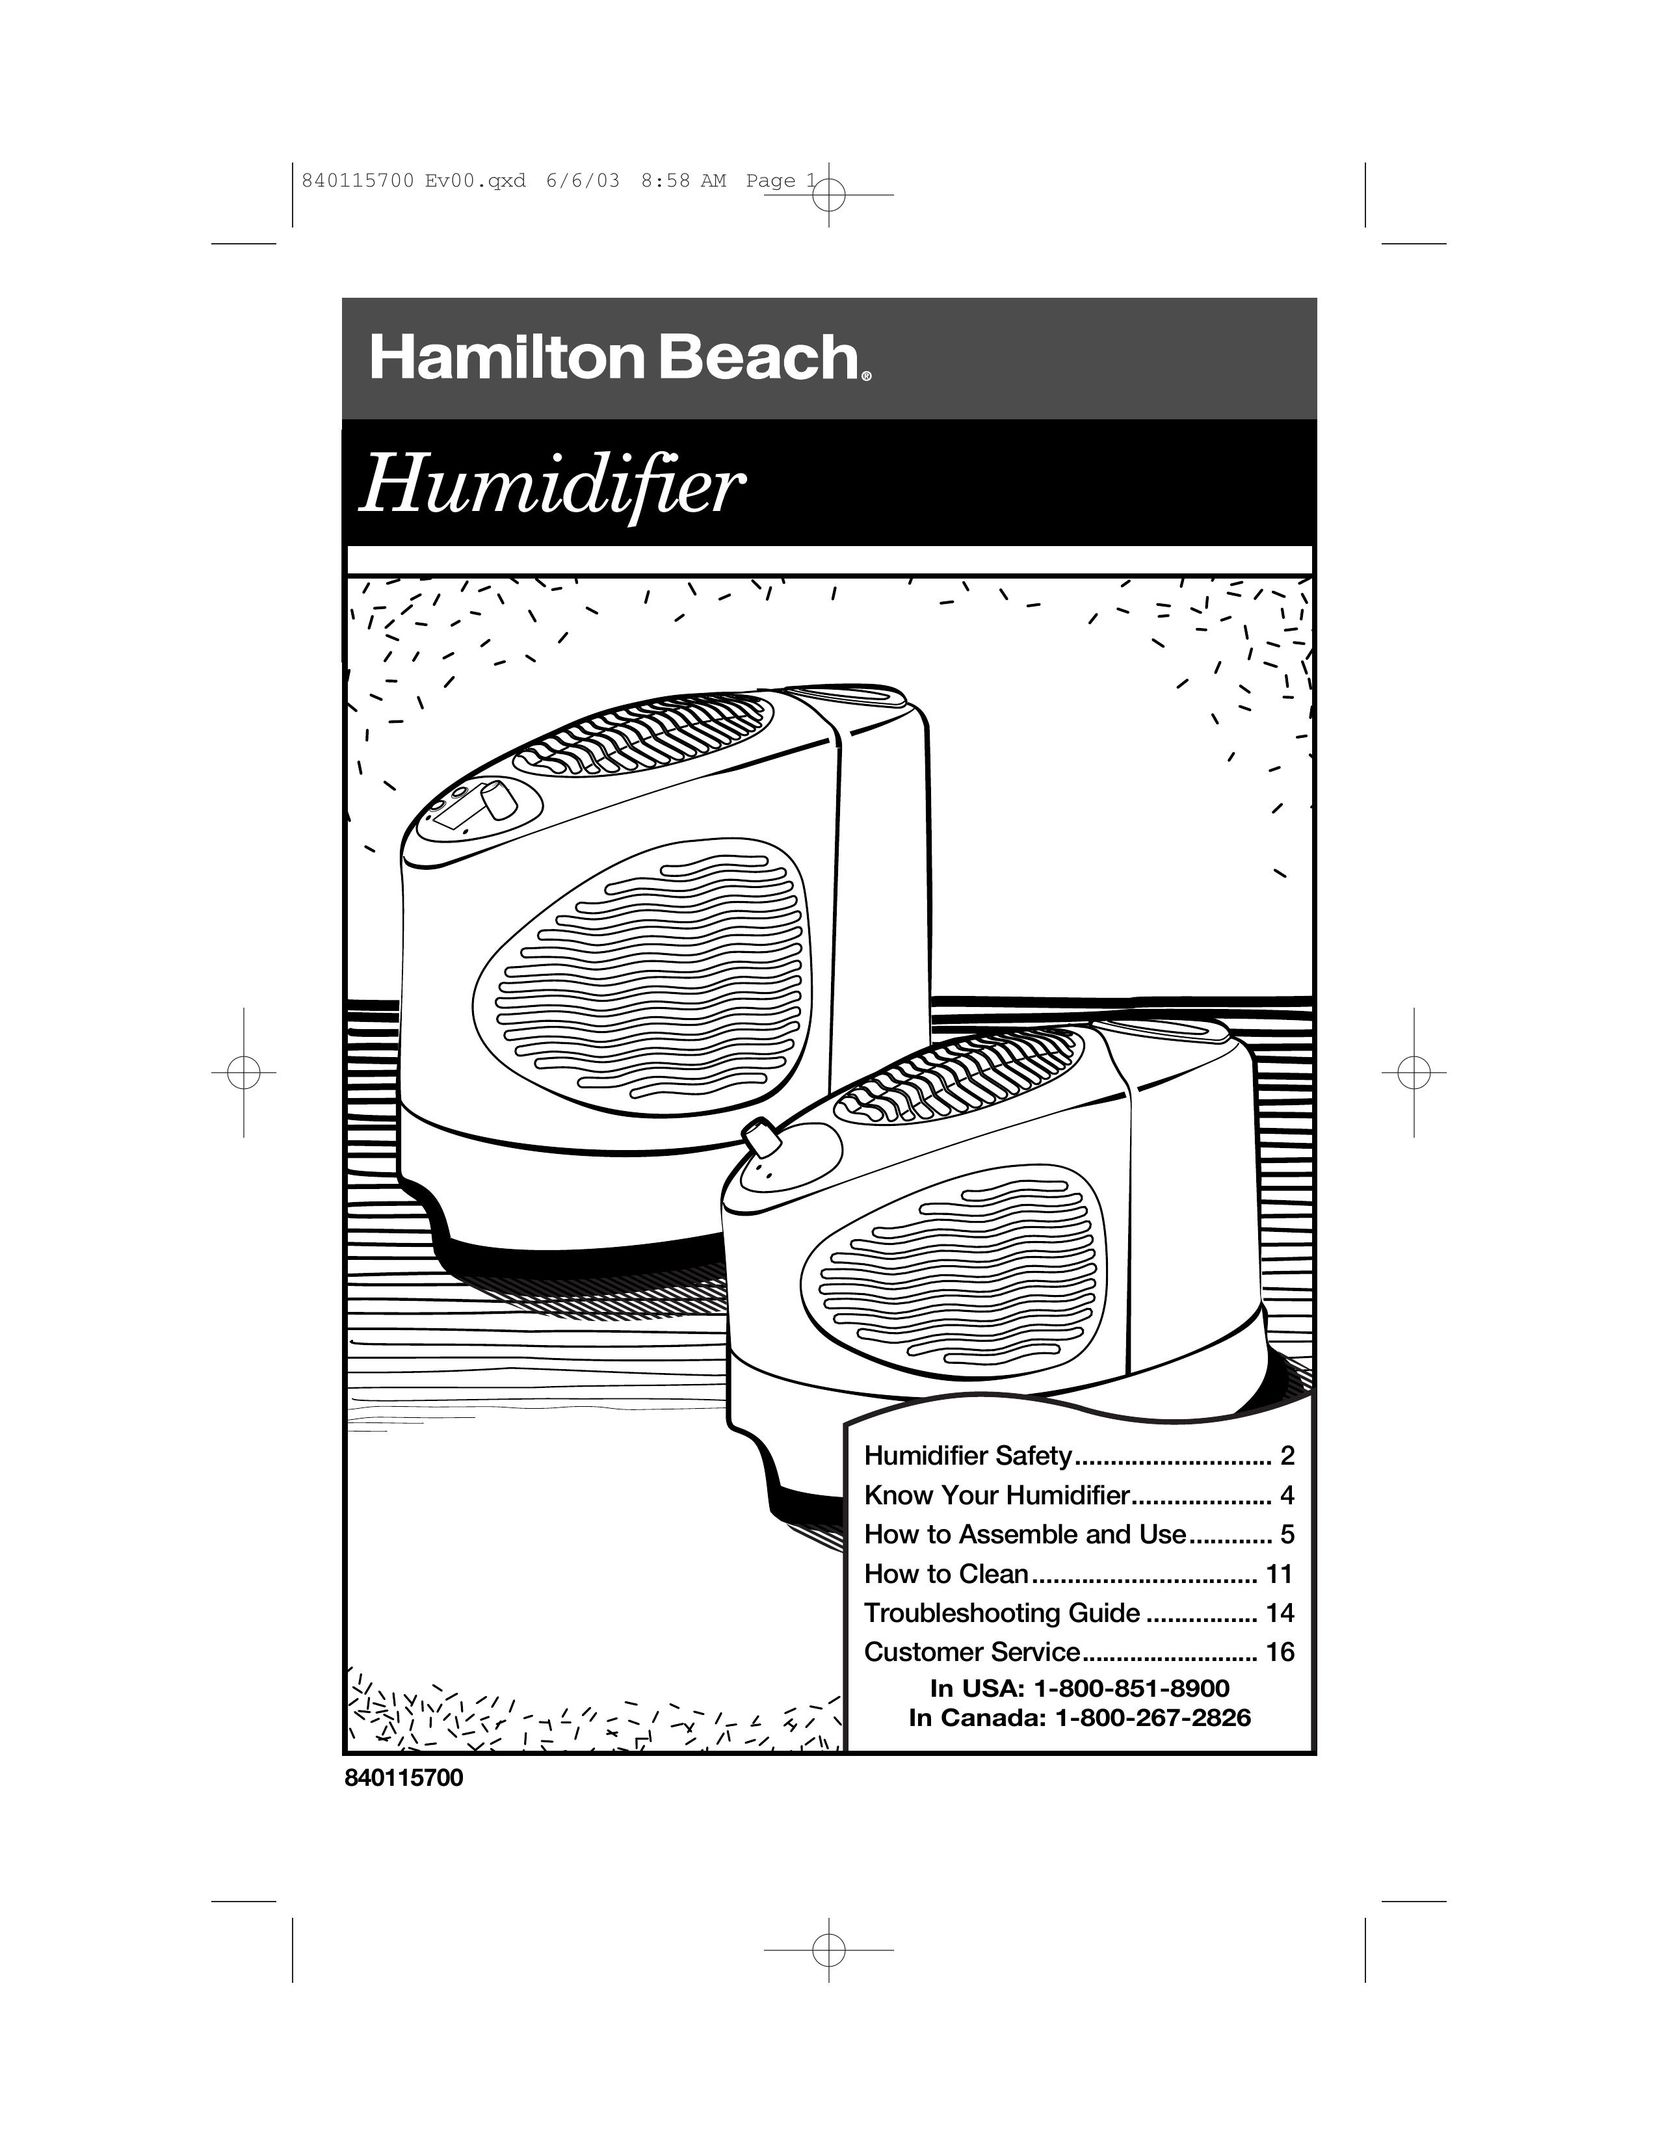 Hamilton Beach 05520C Humidifier User Manual